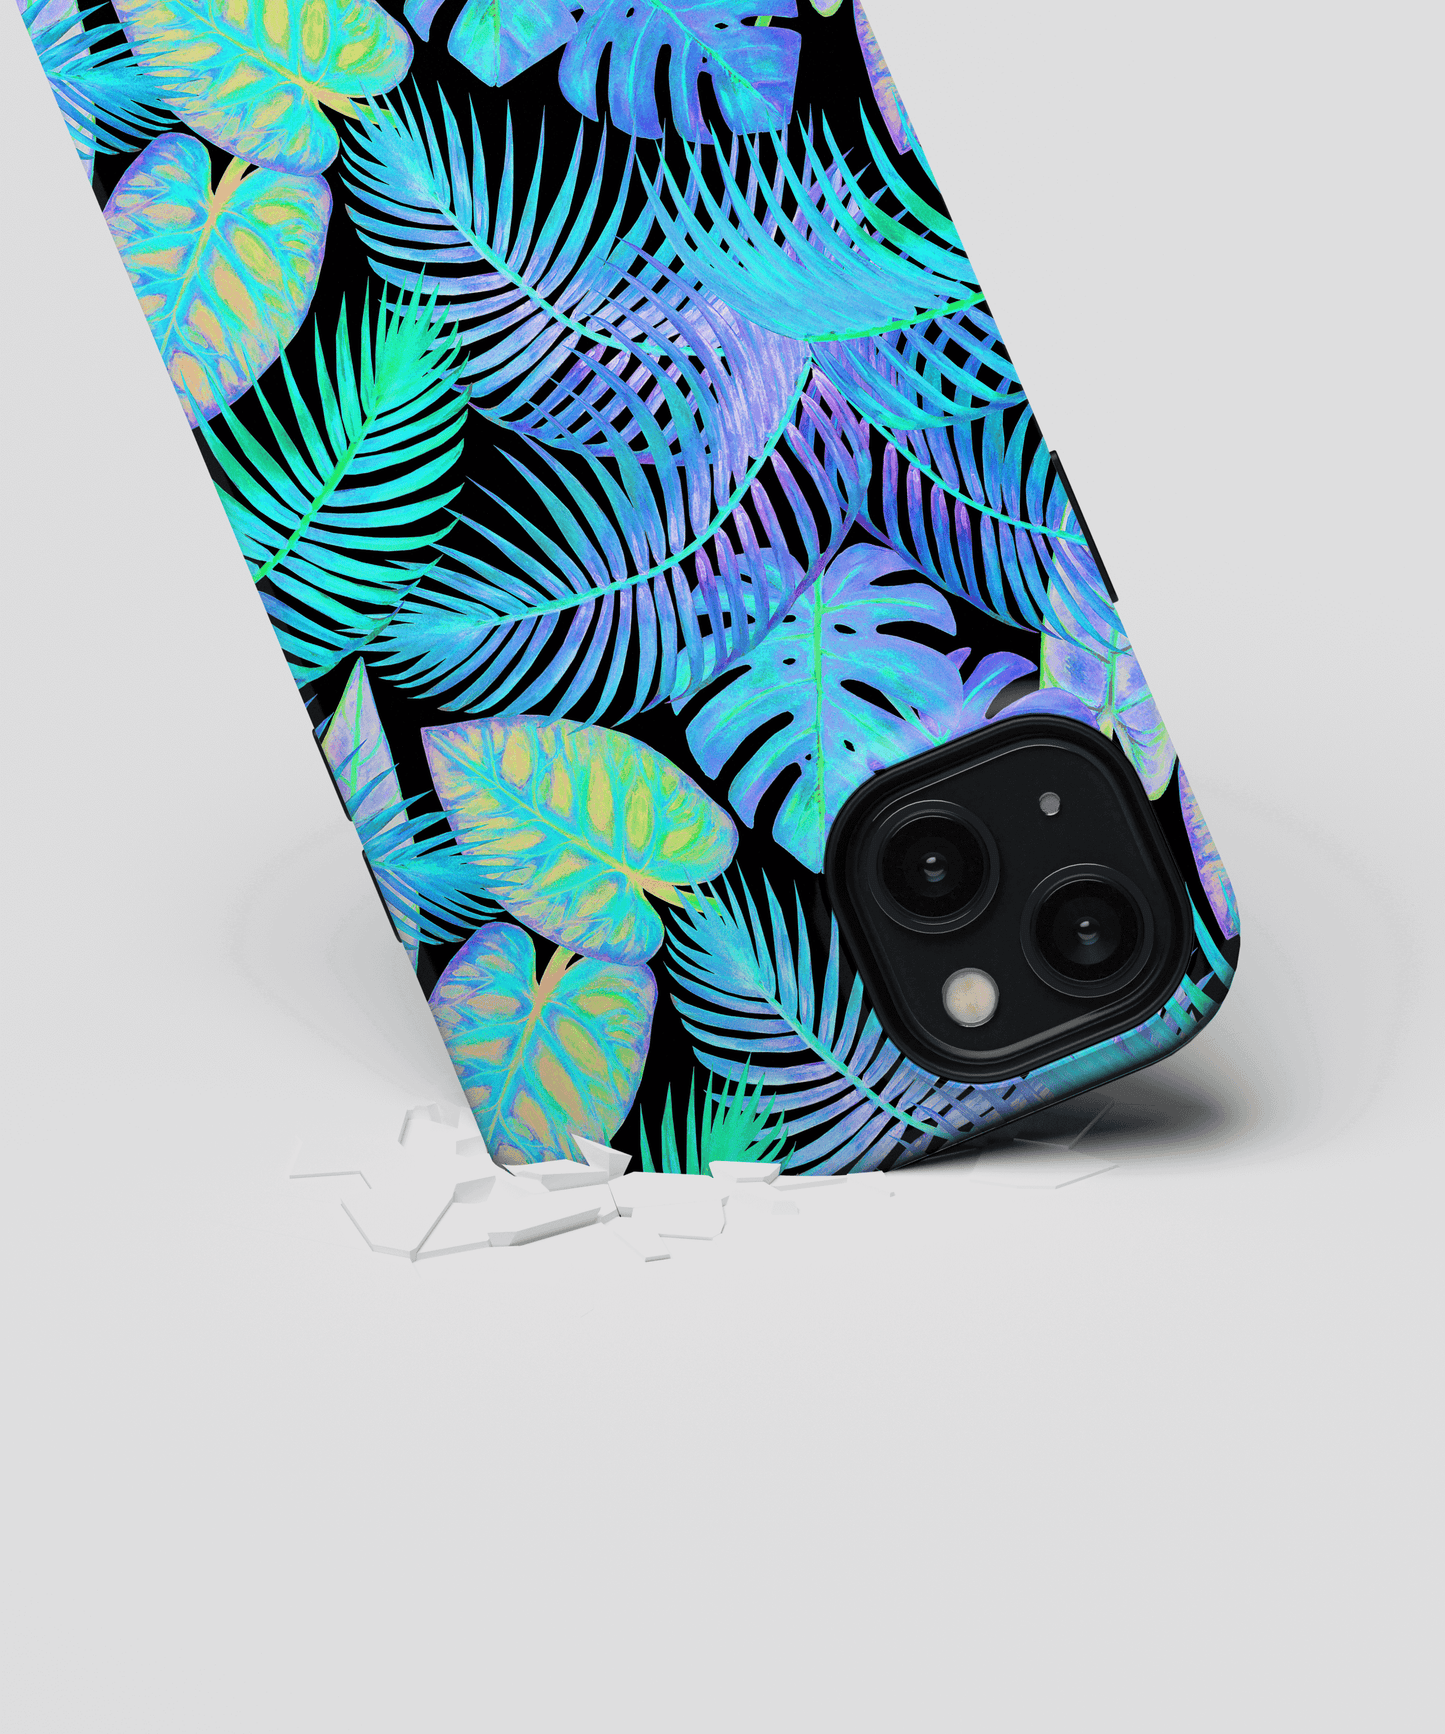 Tropic - Samsung Galaxy S20 fe phone case